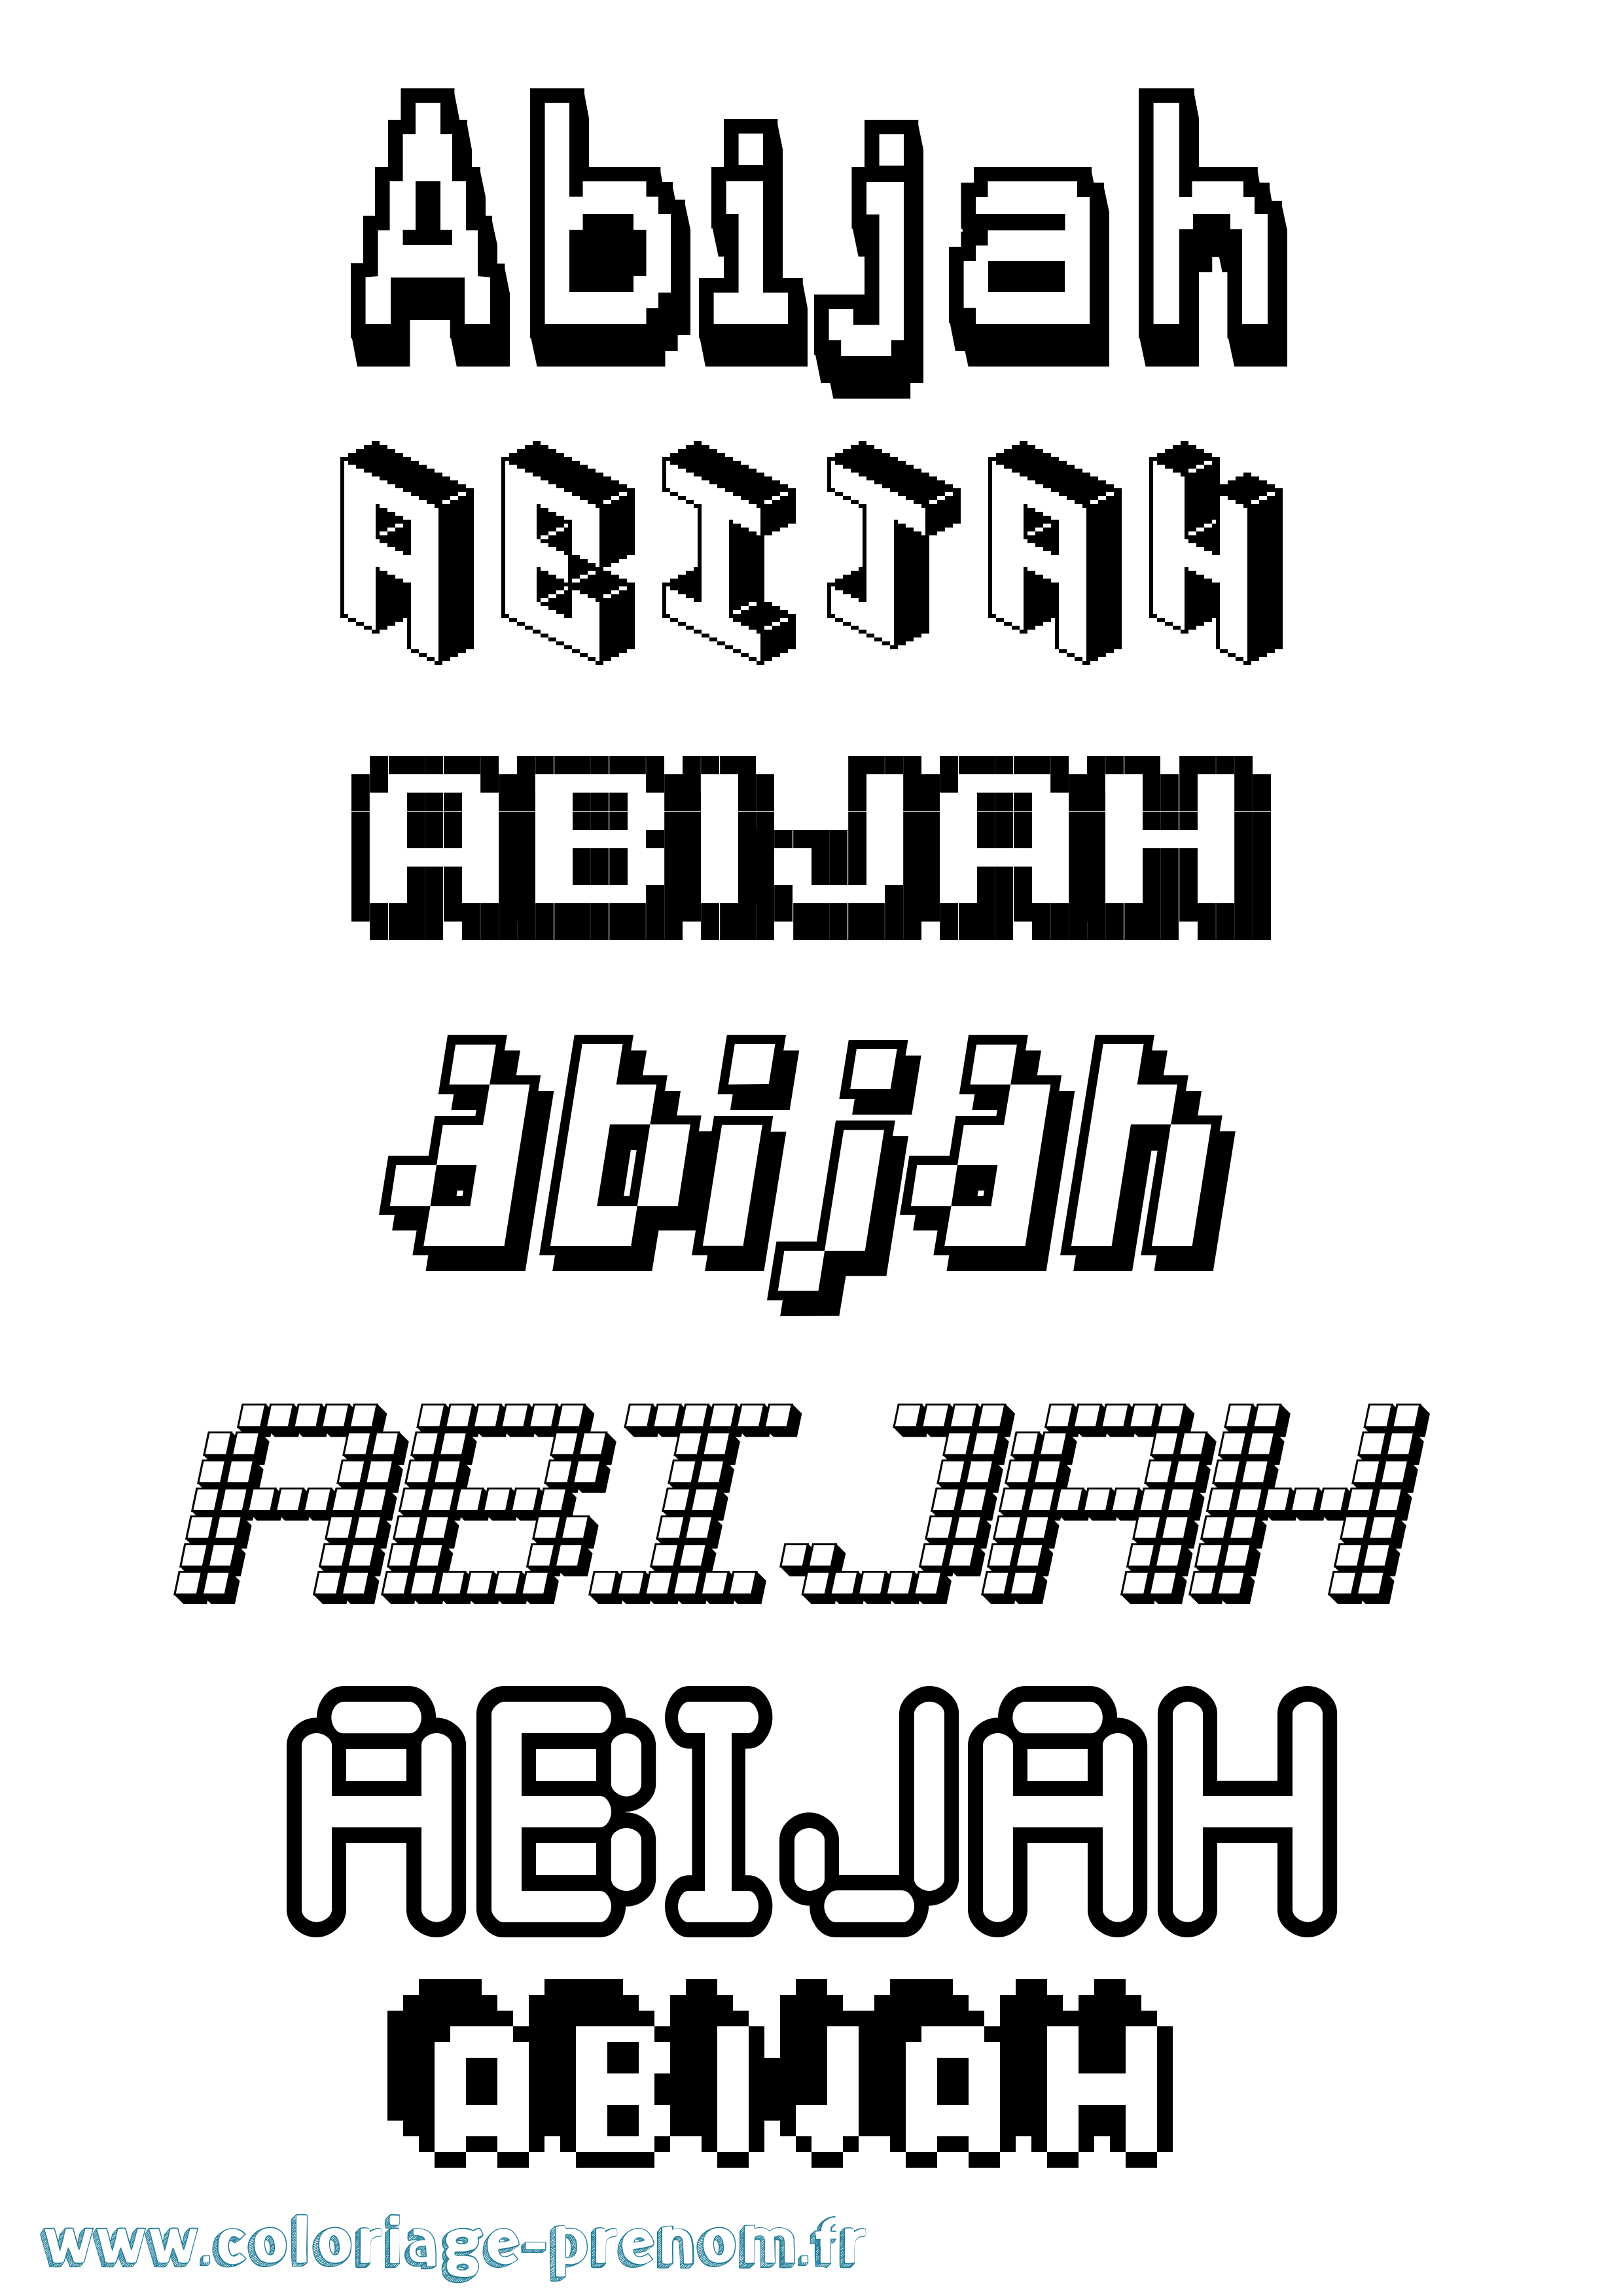 Coloriage prénom Abijah Pixel